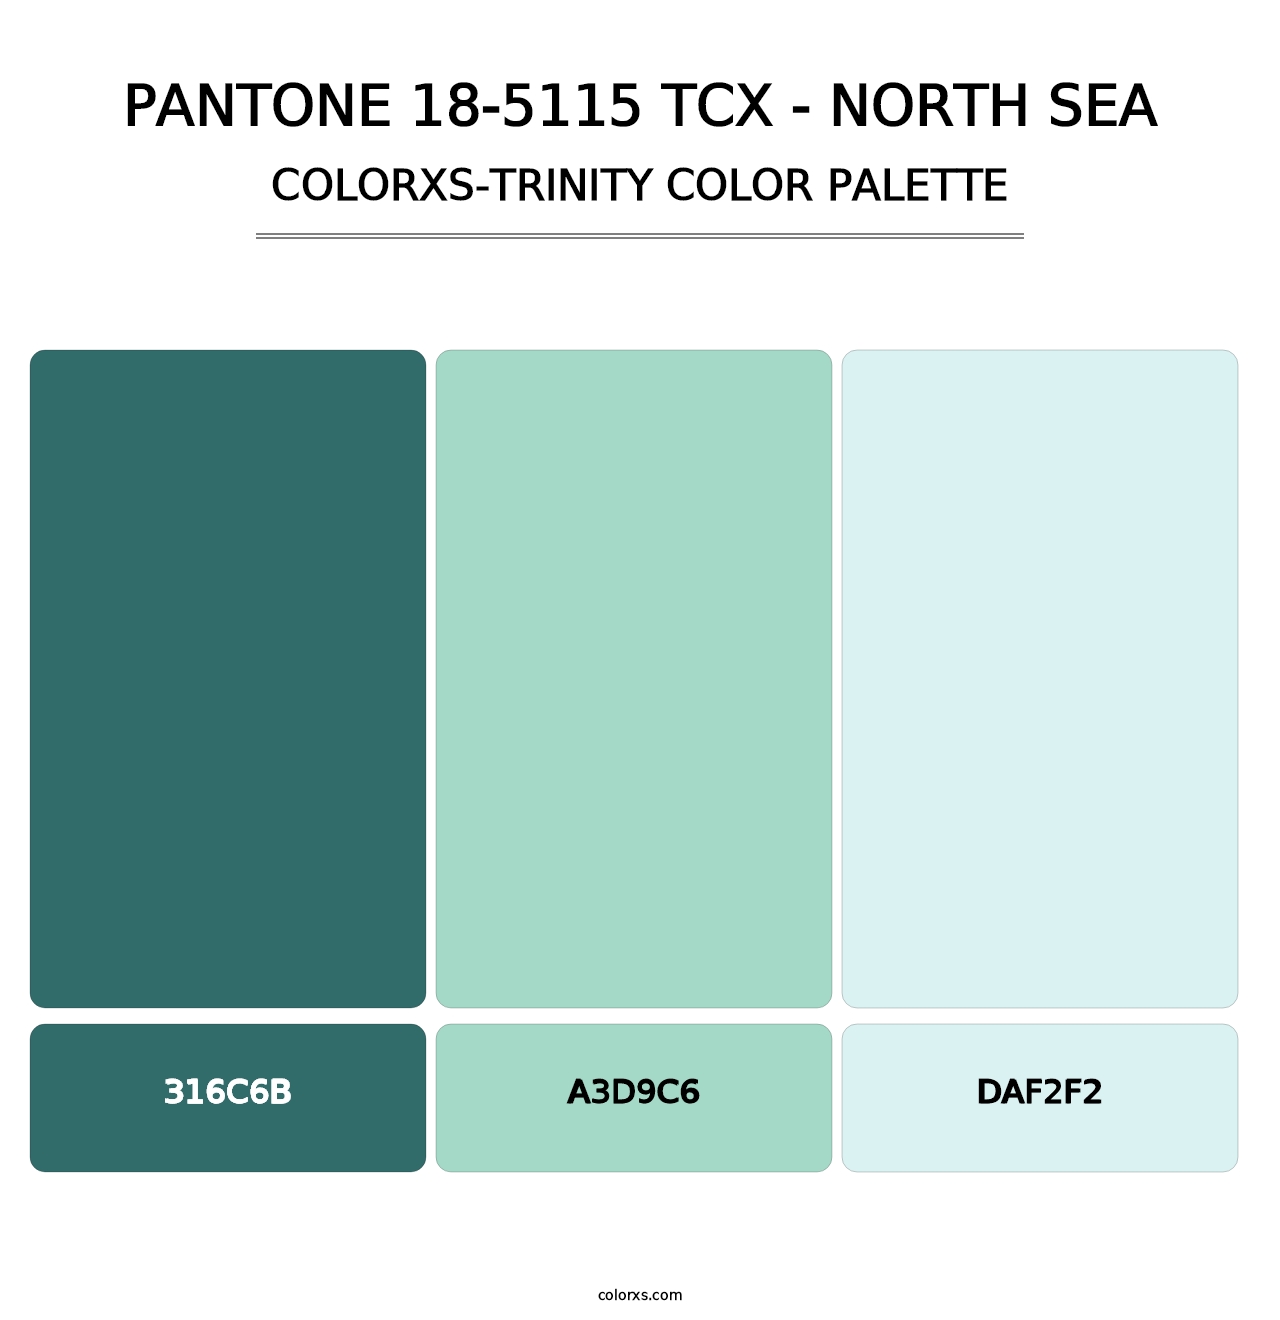 PANTONE 18-5115 TCX - North Sea - Colorxs Trinity Palette